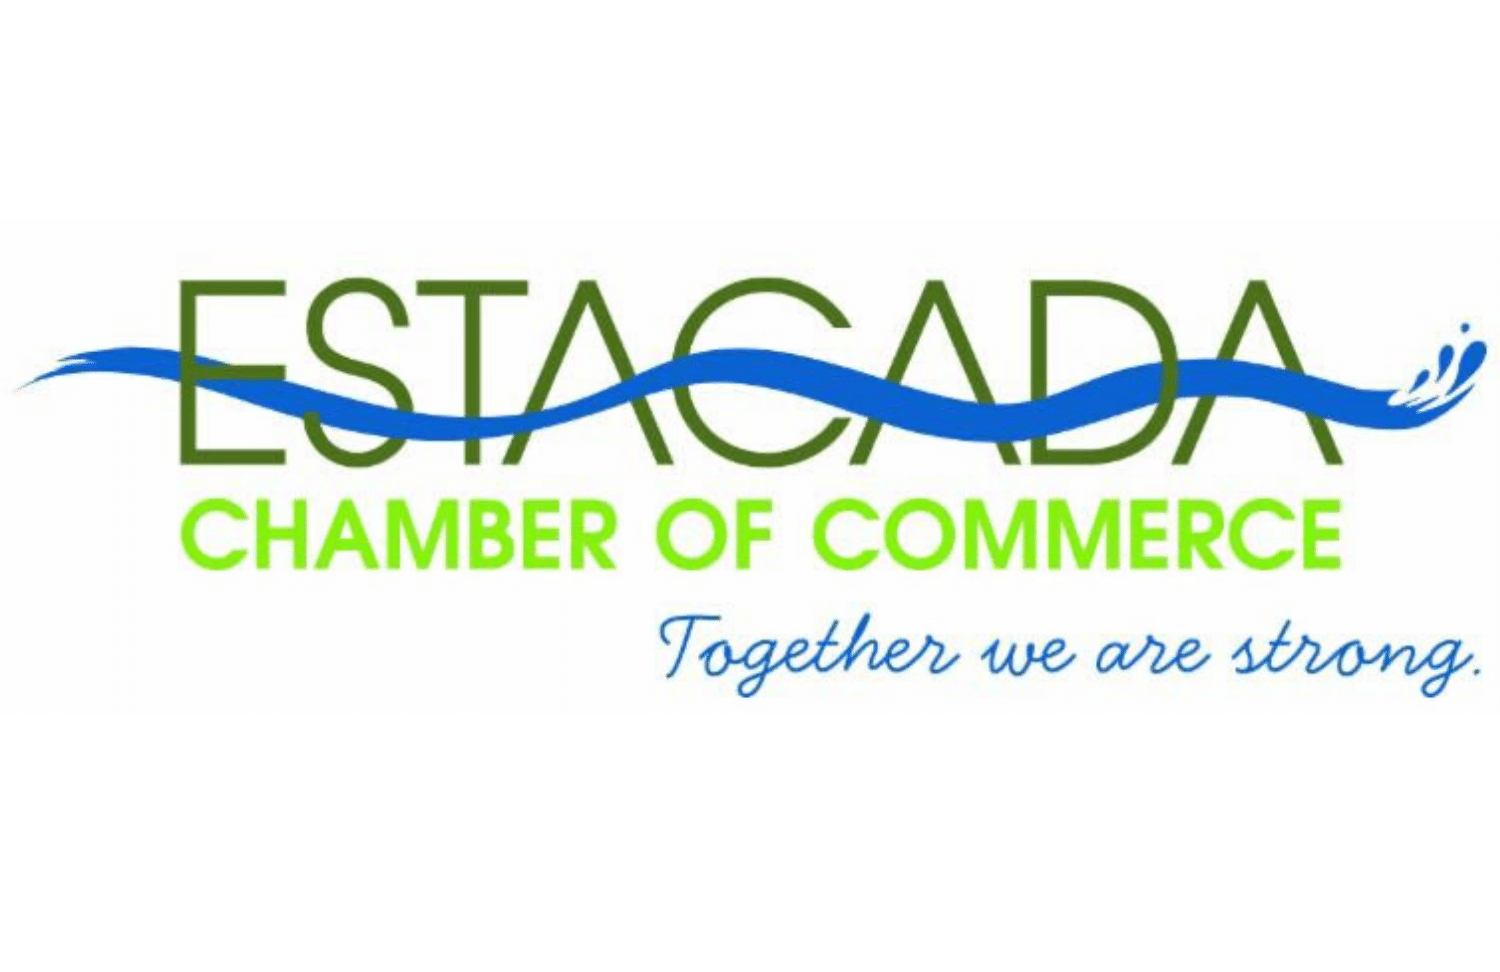 Estacada Chamber of Commerce